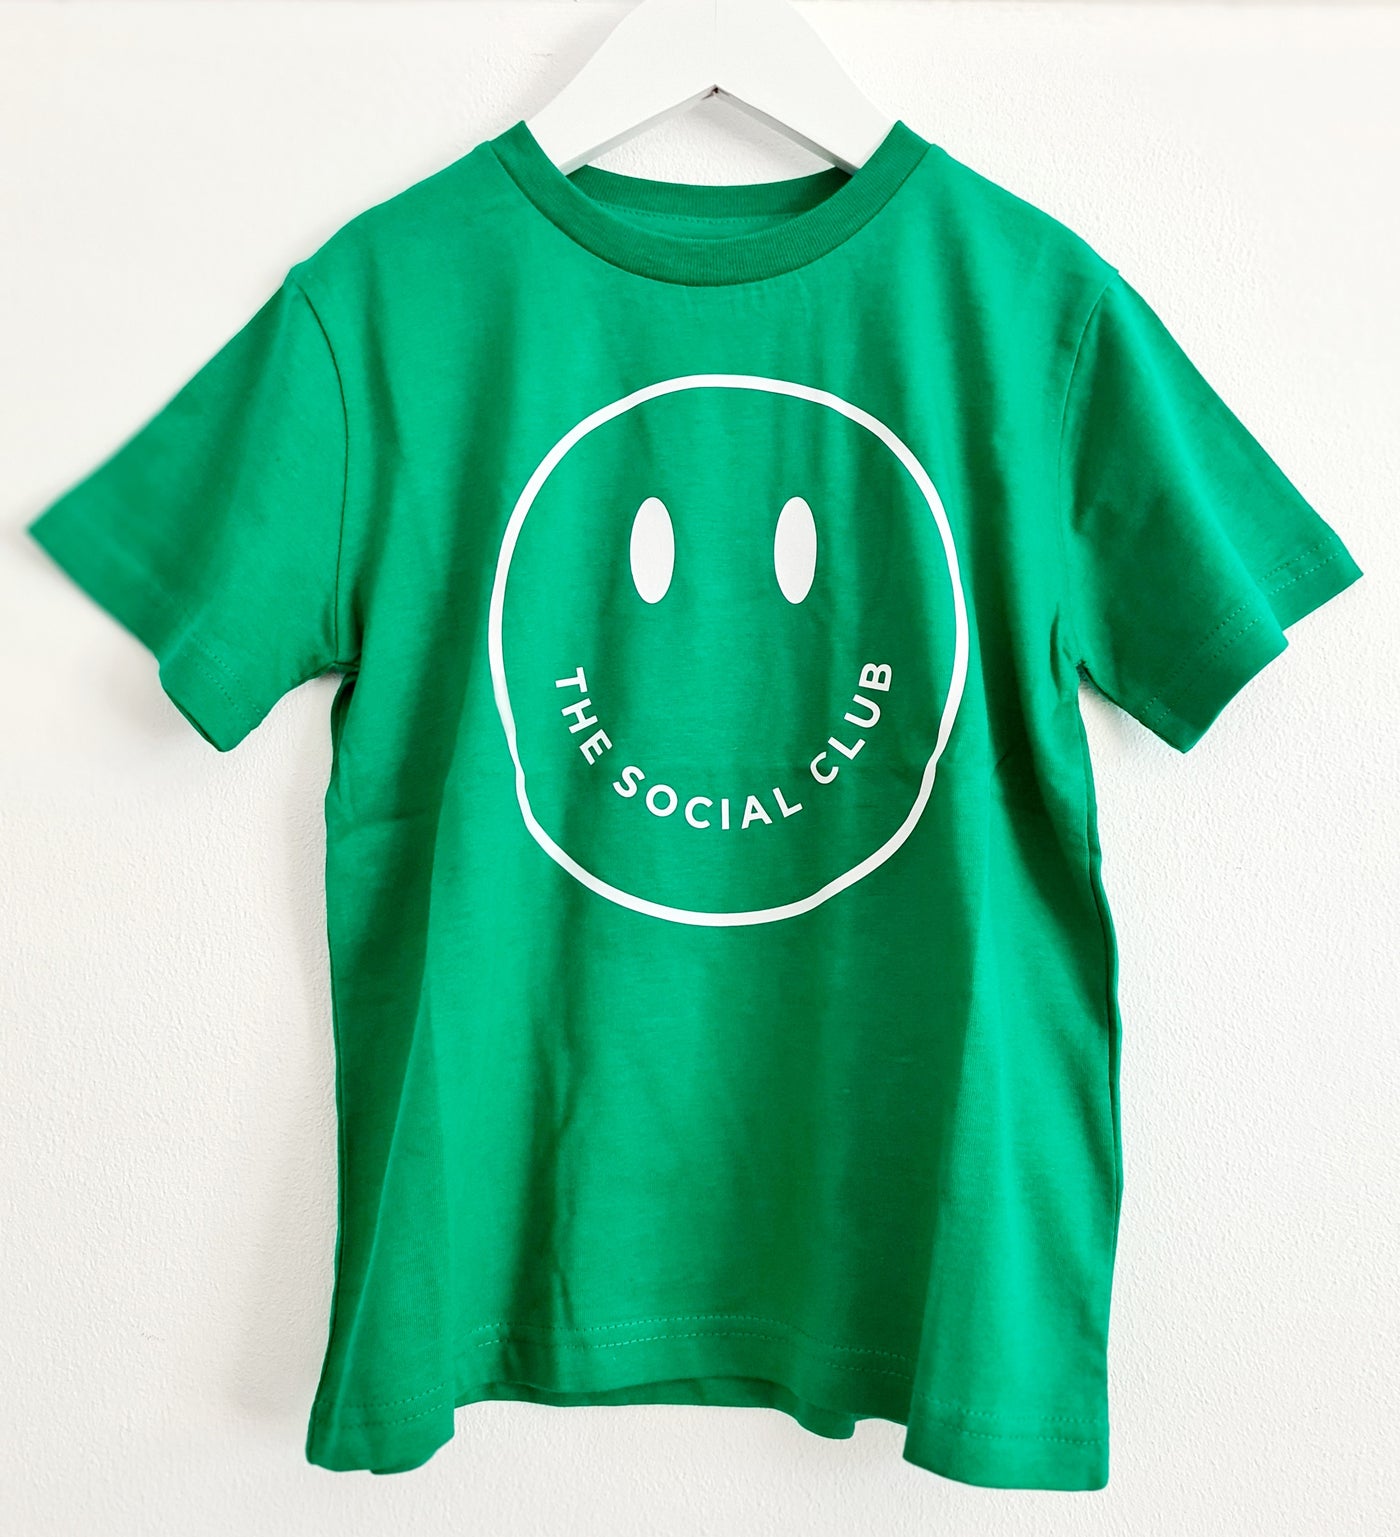 Kids Green & White Happy Face 100% Organic Cotton Tshirt